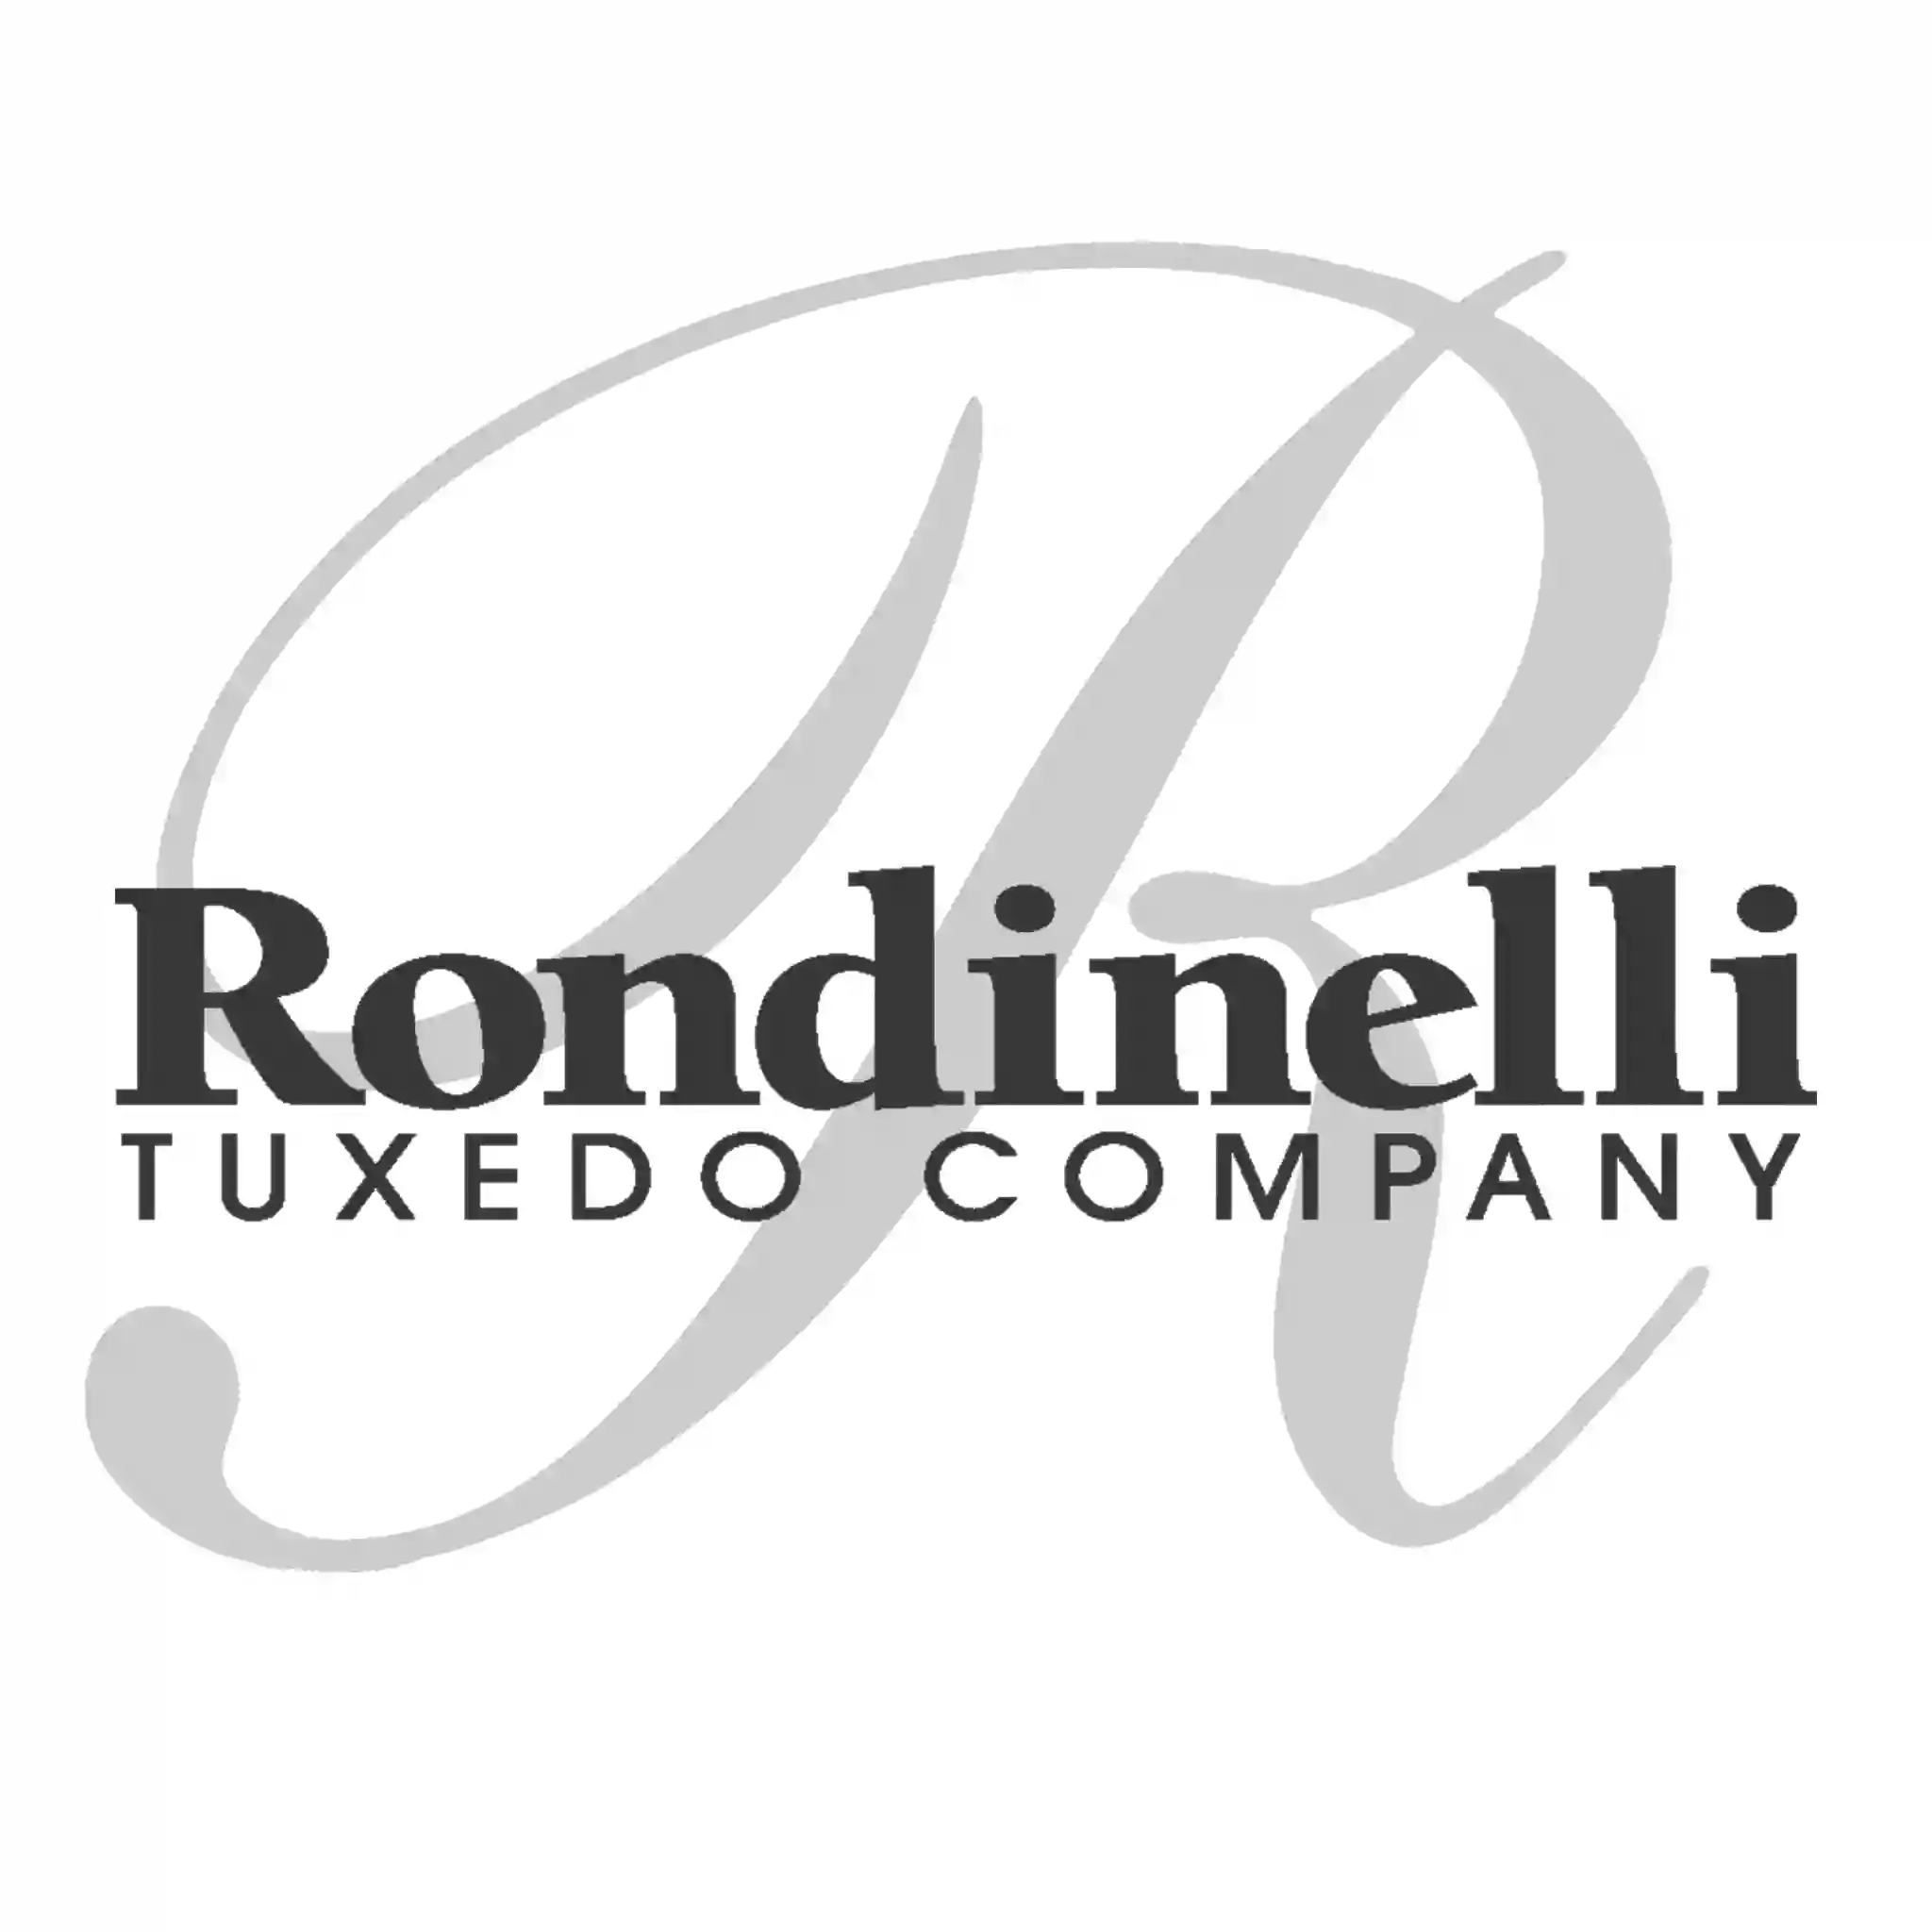 Rondinelli Tuxedo Company - Boardman